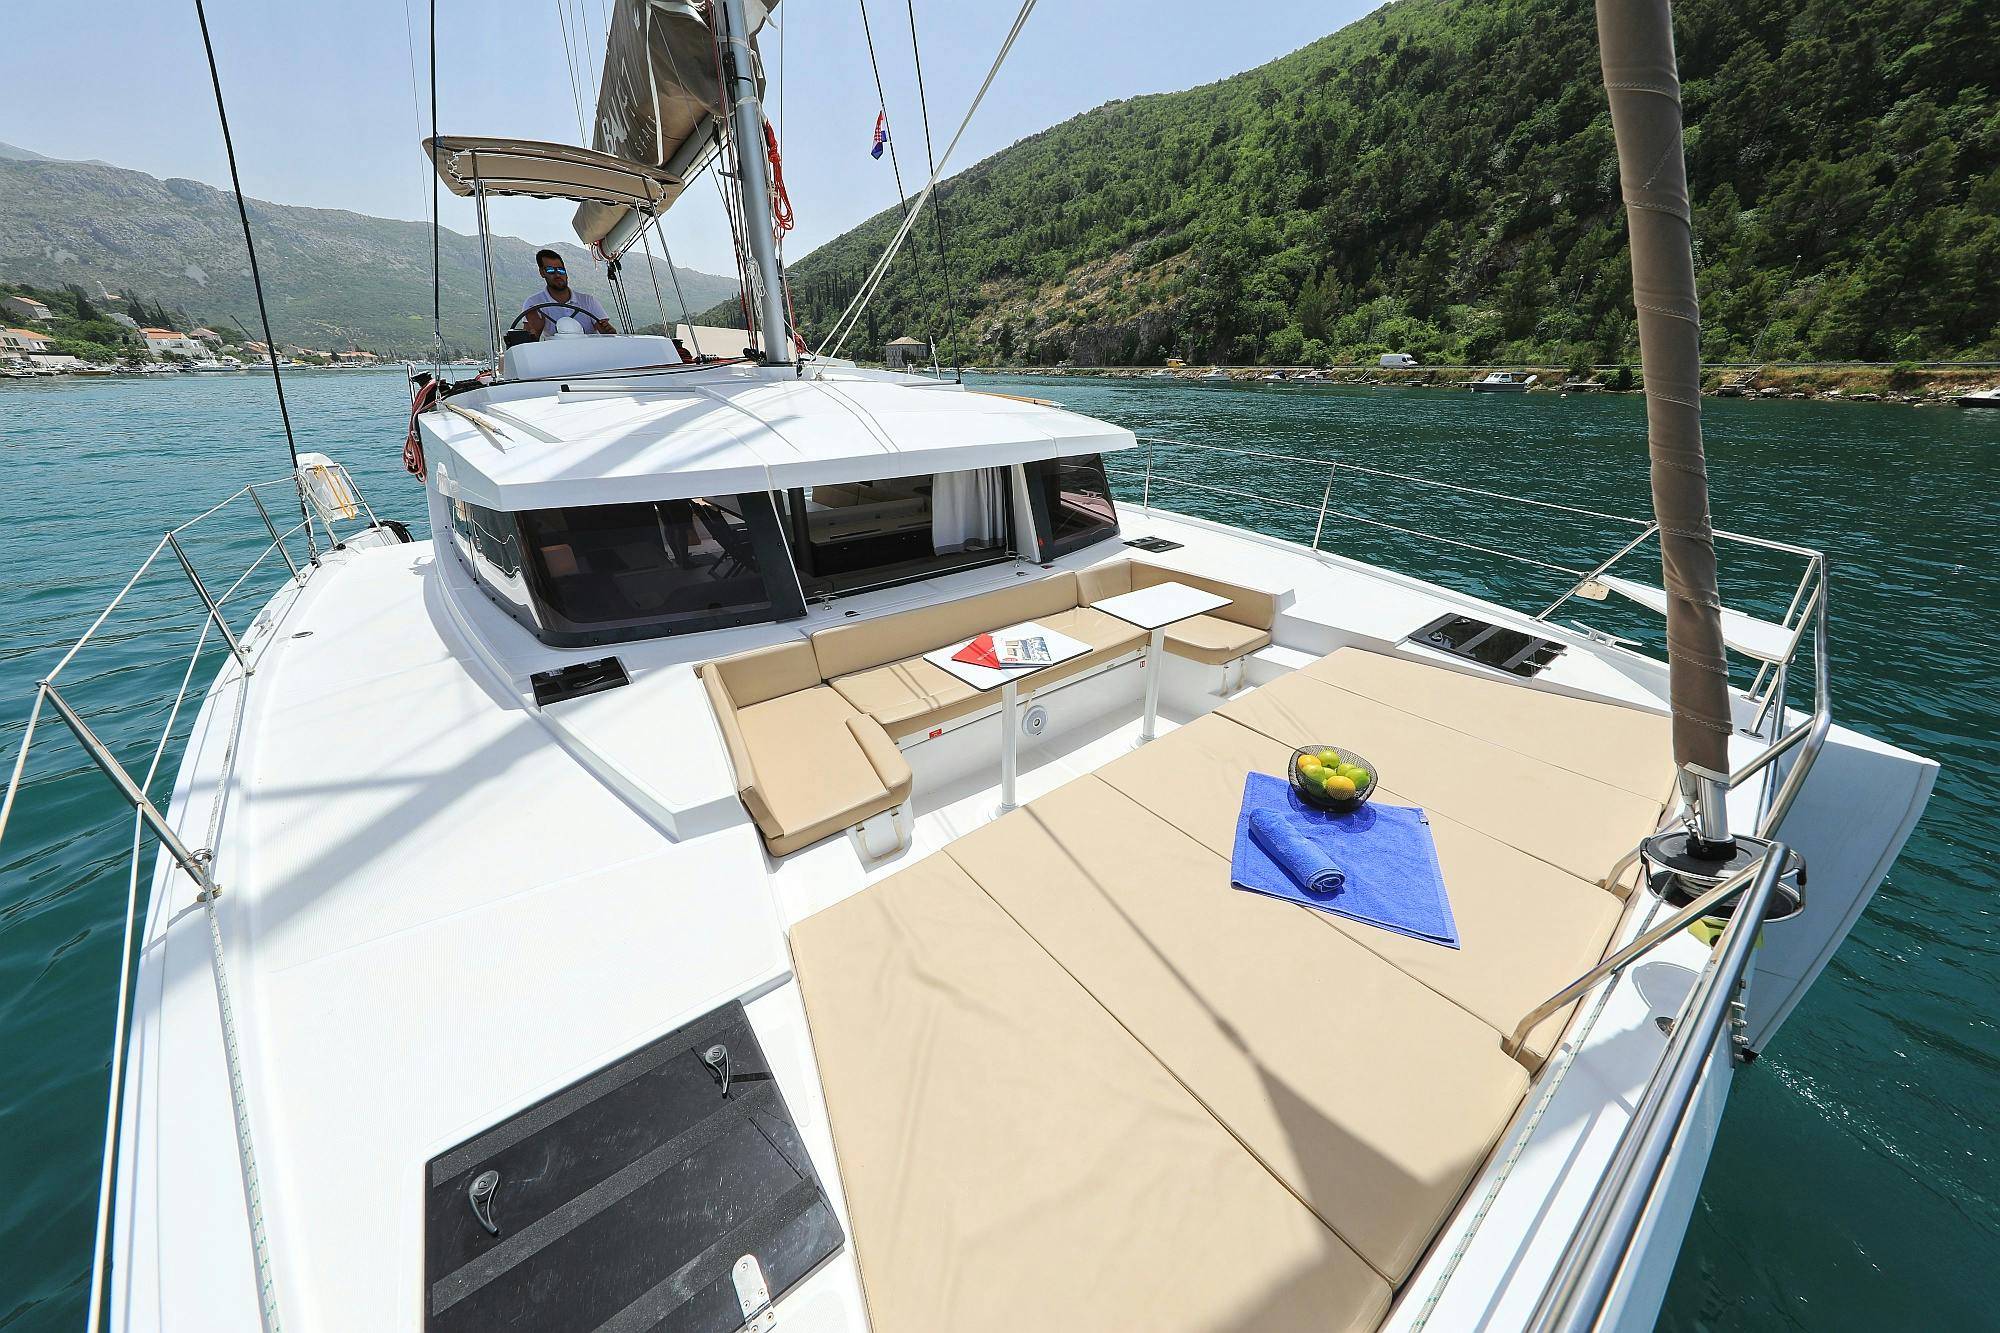 Book Bali 4.1 - 4 cab. Catamaran for bareboat charter in Dubrovnik, Komolac, ACI Marina Dubrovnik, Dubrovnik region, Croatia with TripYacht!, picture 6